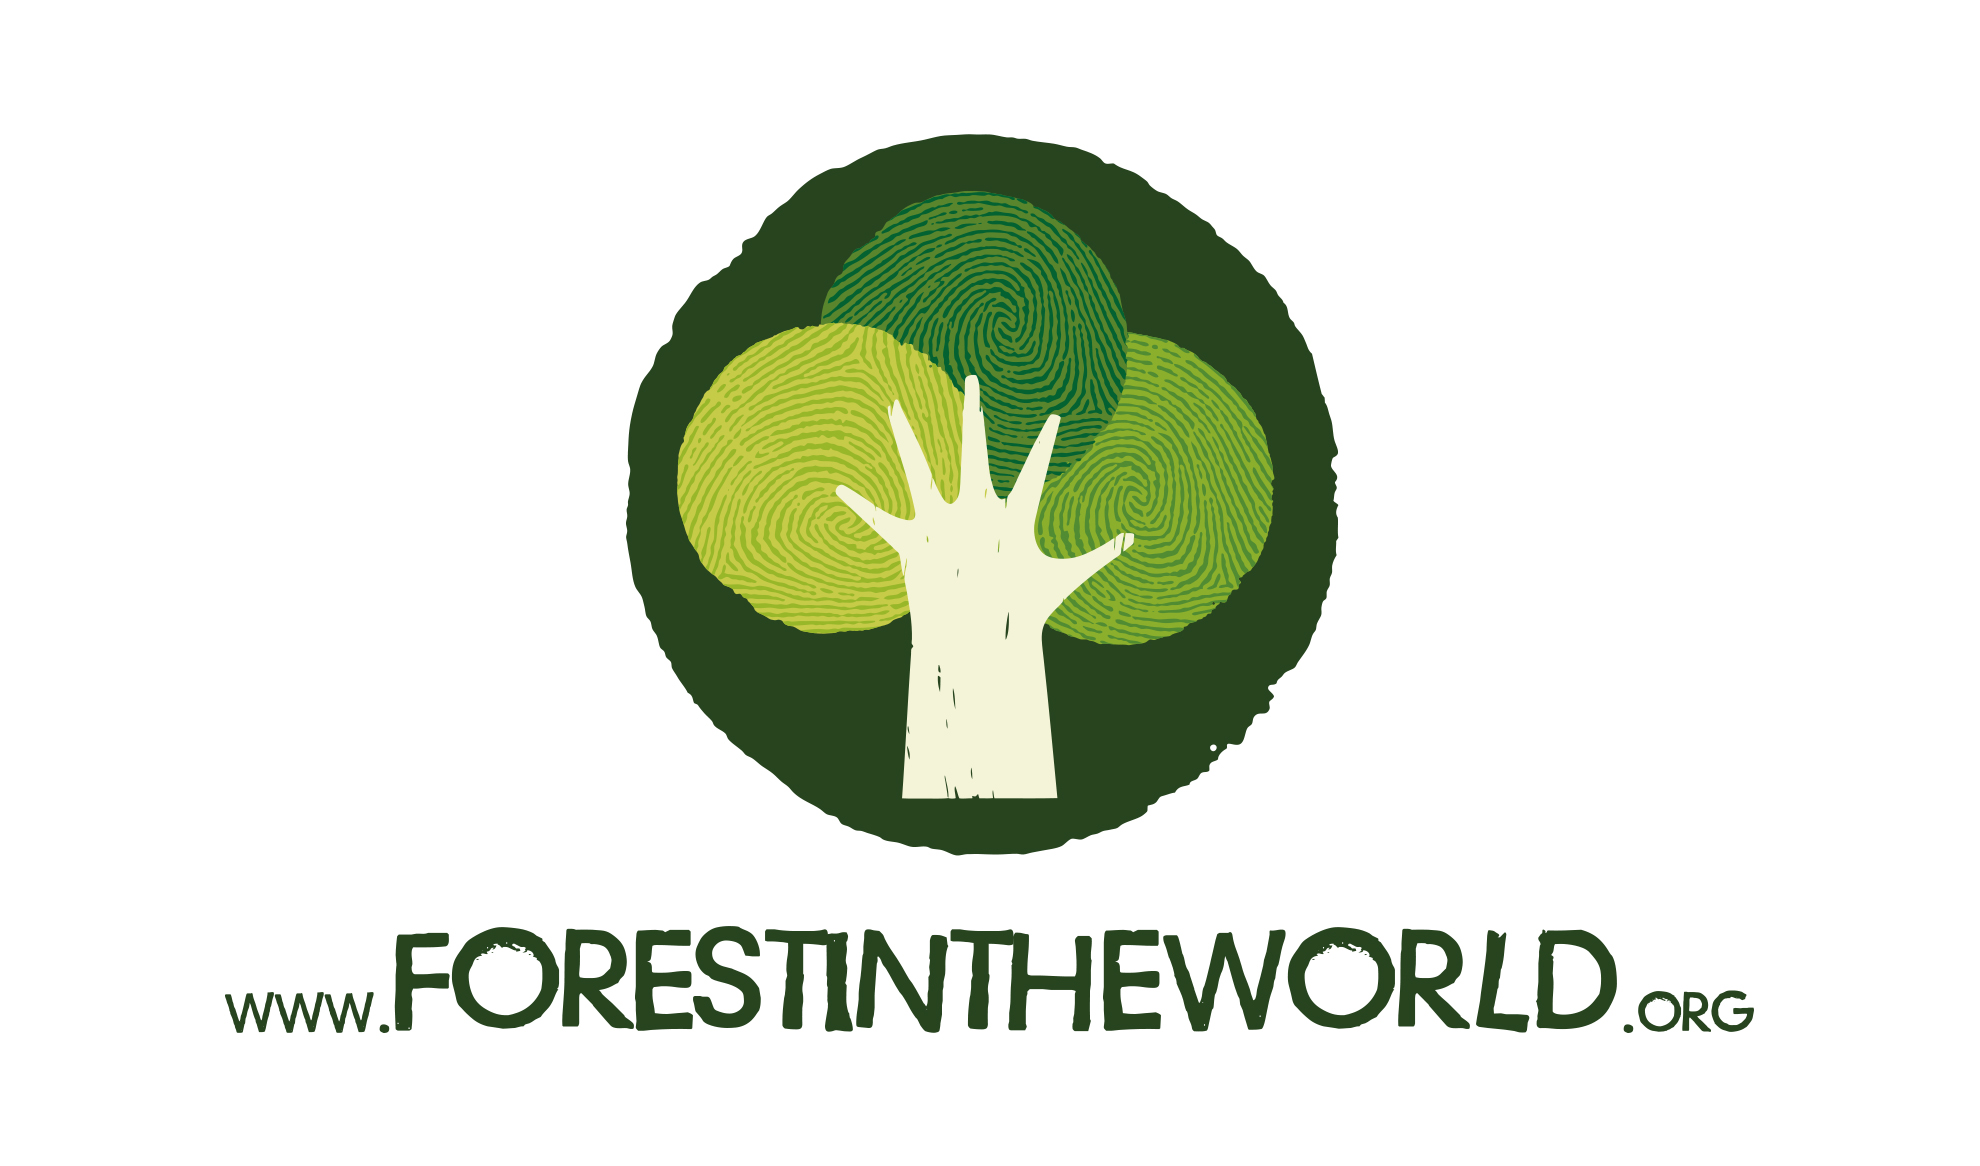 Forest in the world logo - Eleonora Casetta